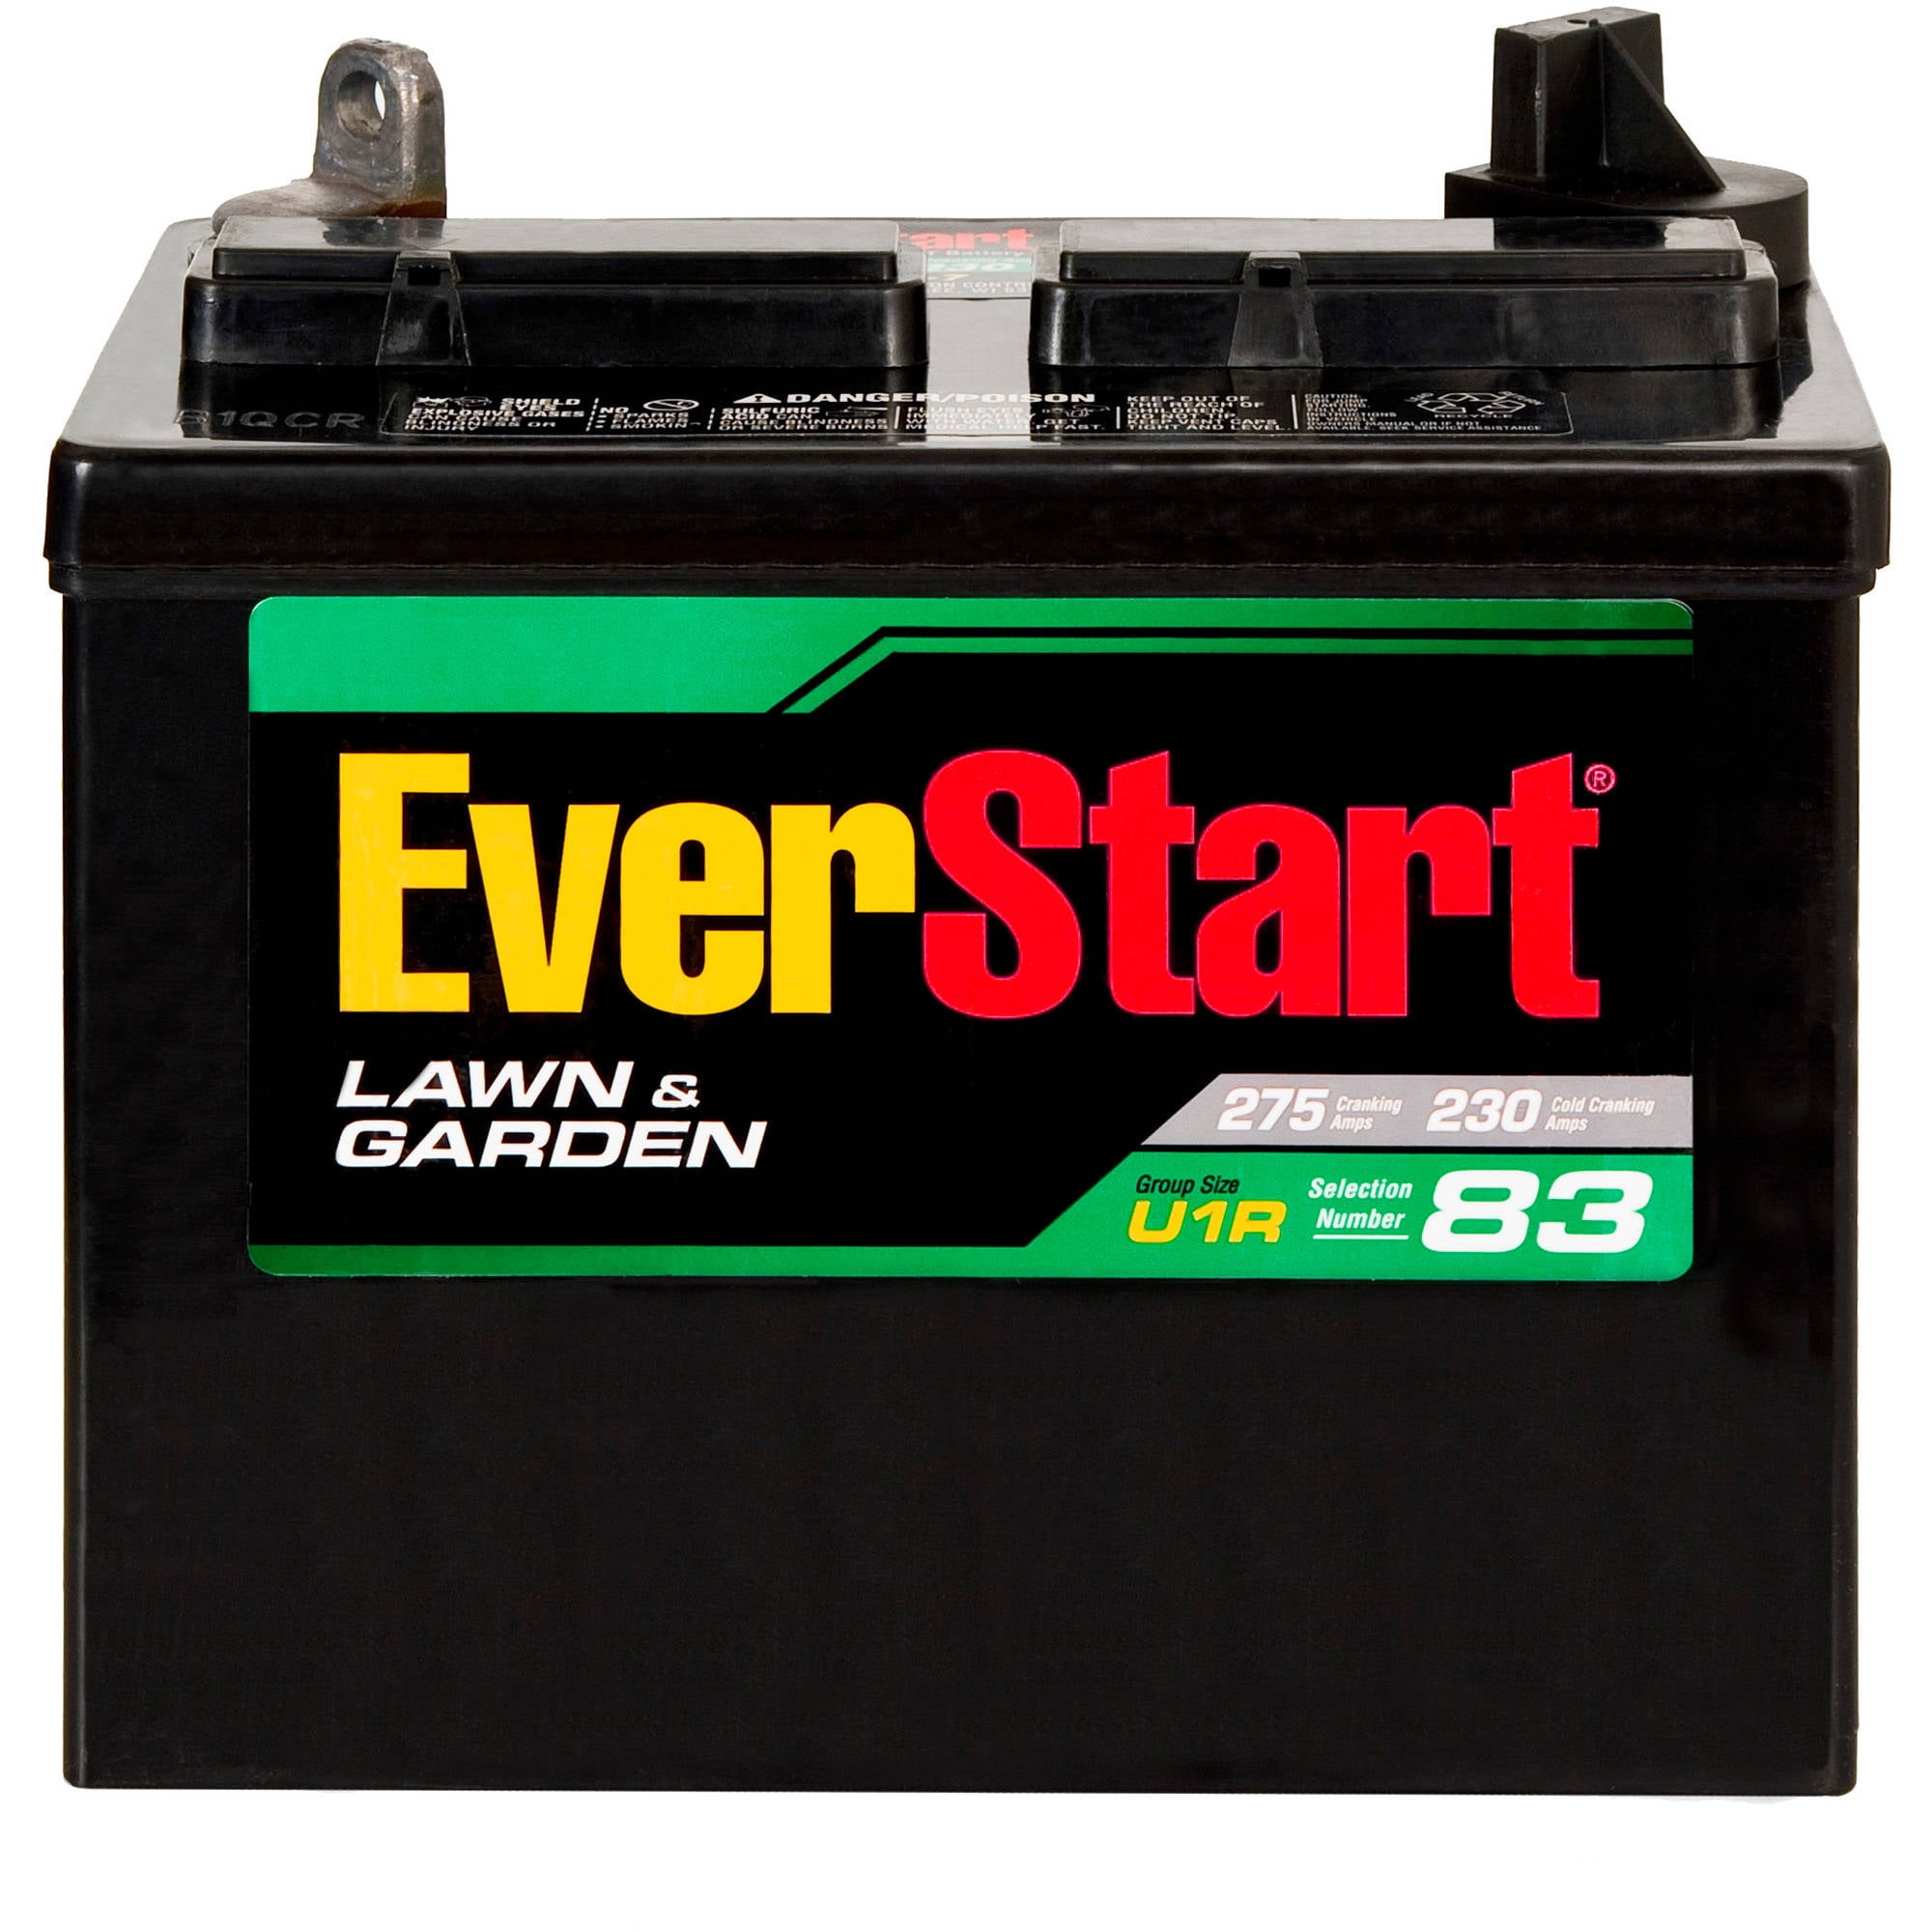 everstart-lawn-garden-battery-u1r-7-walmart-walmart